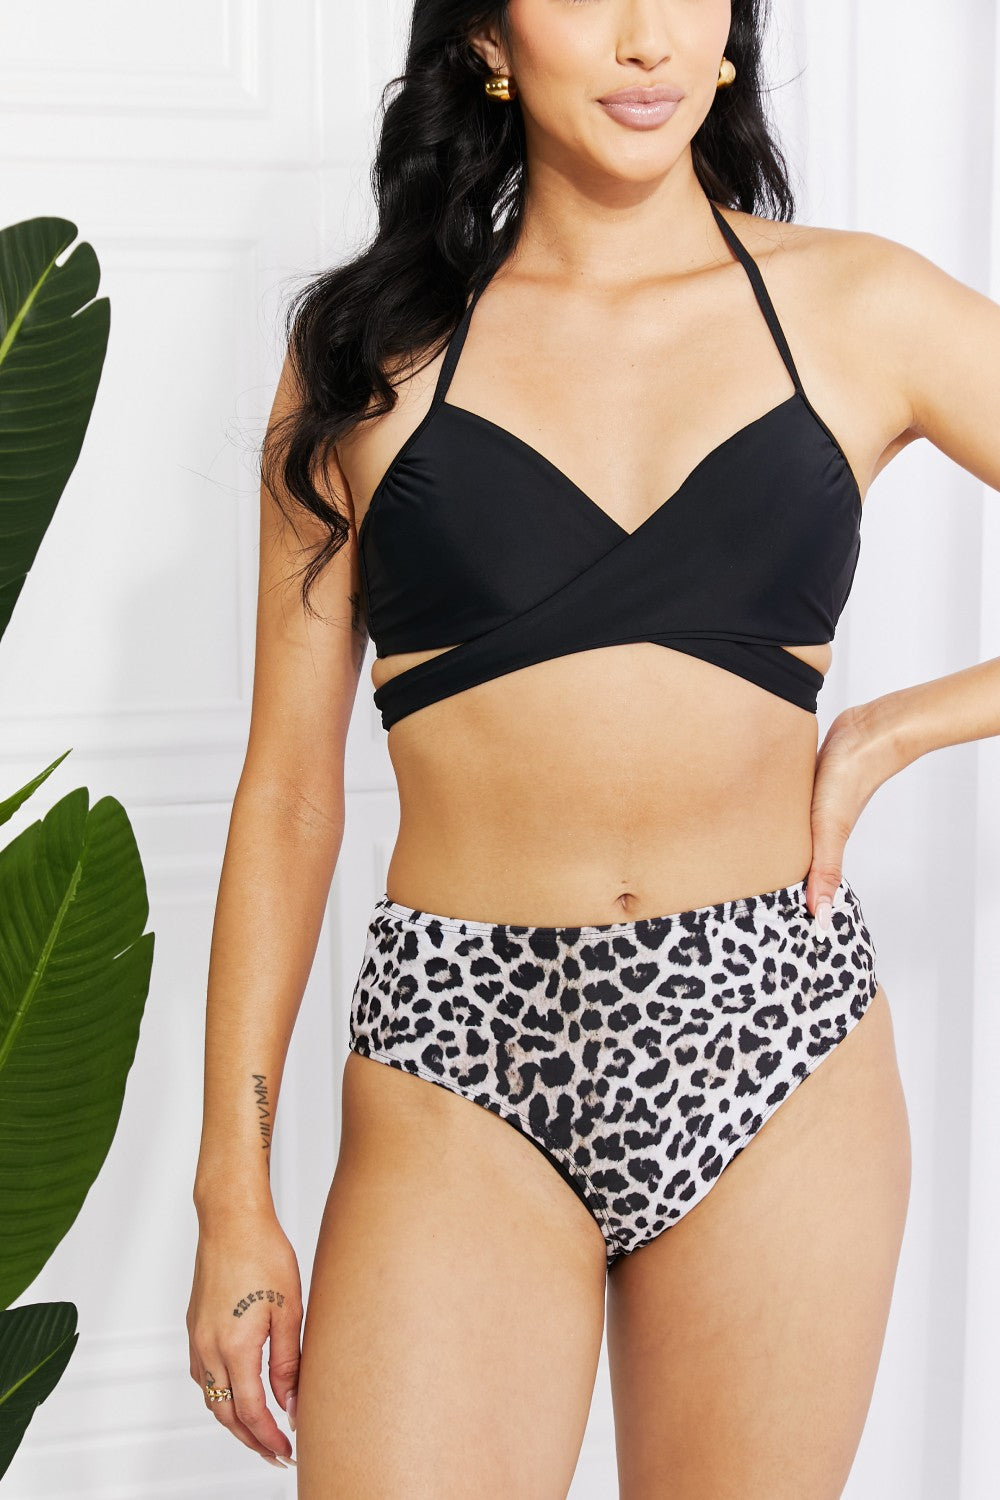 Summer Splash Halter Bikini Set in Black - Women’s Clothing & Accessories - Swimwear - 11 - 2024